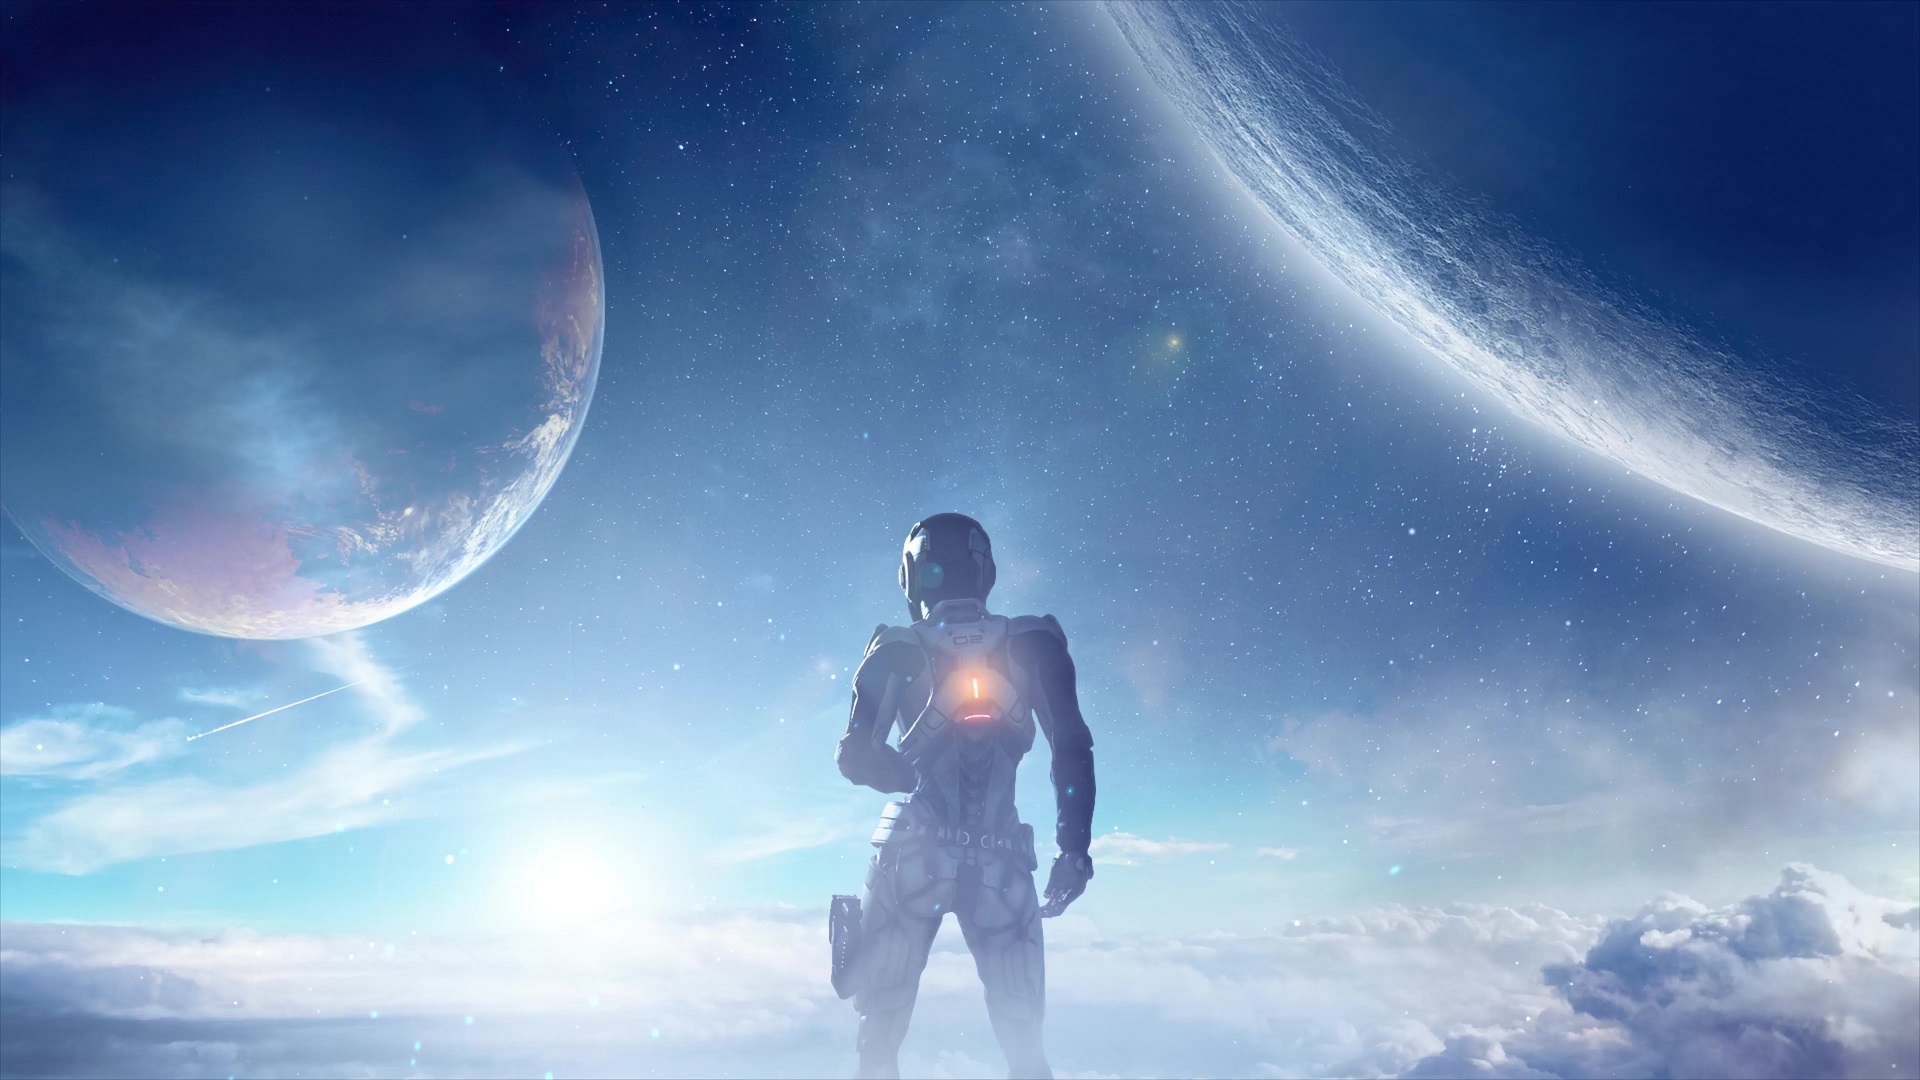 Mass Effect 4 Andromeda